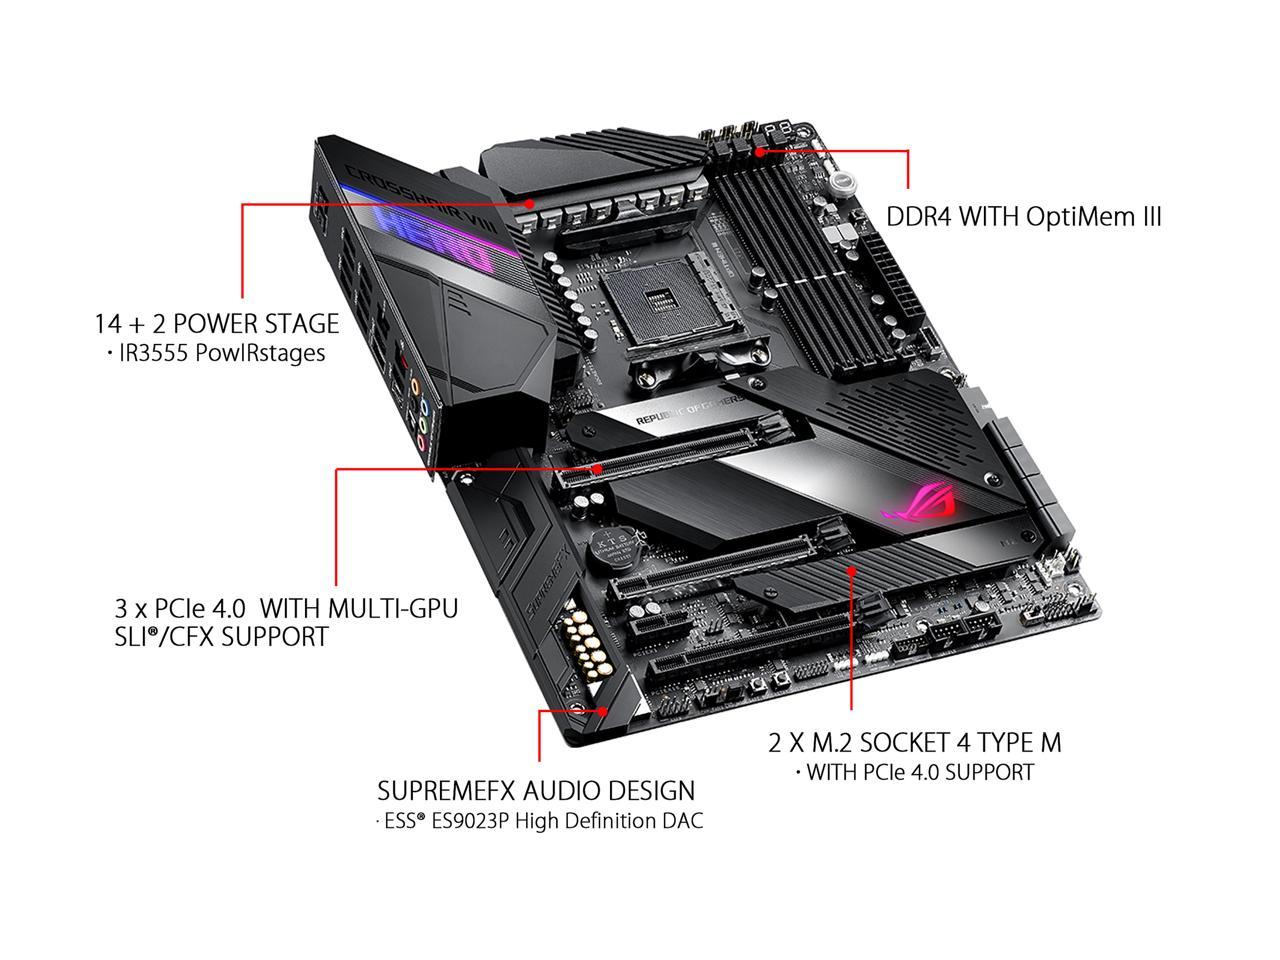 ASUS AMD AM4 ROG X570 Crosshair VIII Hero ATX Motherboard with PCIe 4.0, 2.5Gbps LAN, Dual M.2, SATA 6Gb/s, USB 3.2 Gen 2